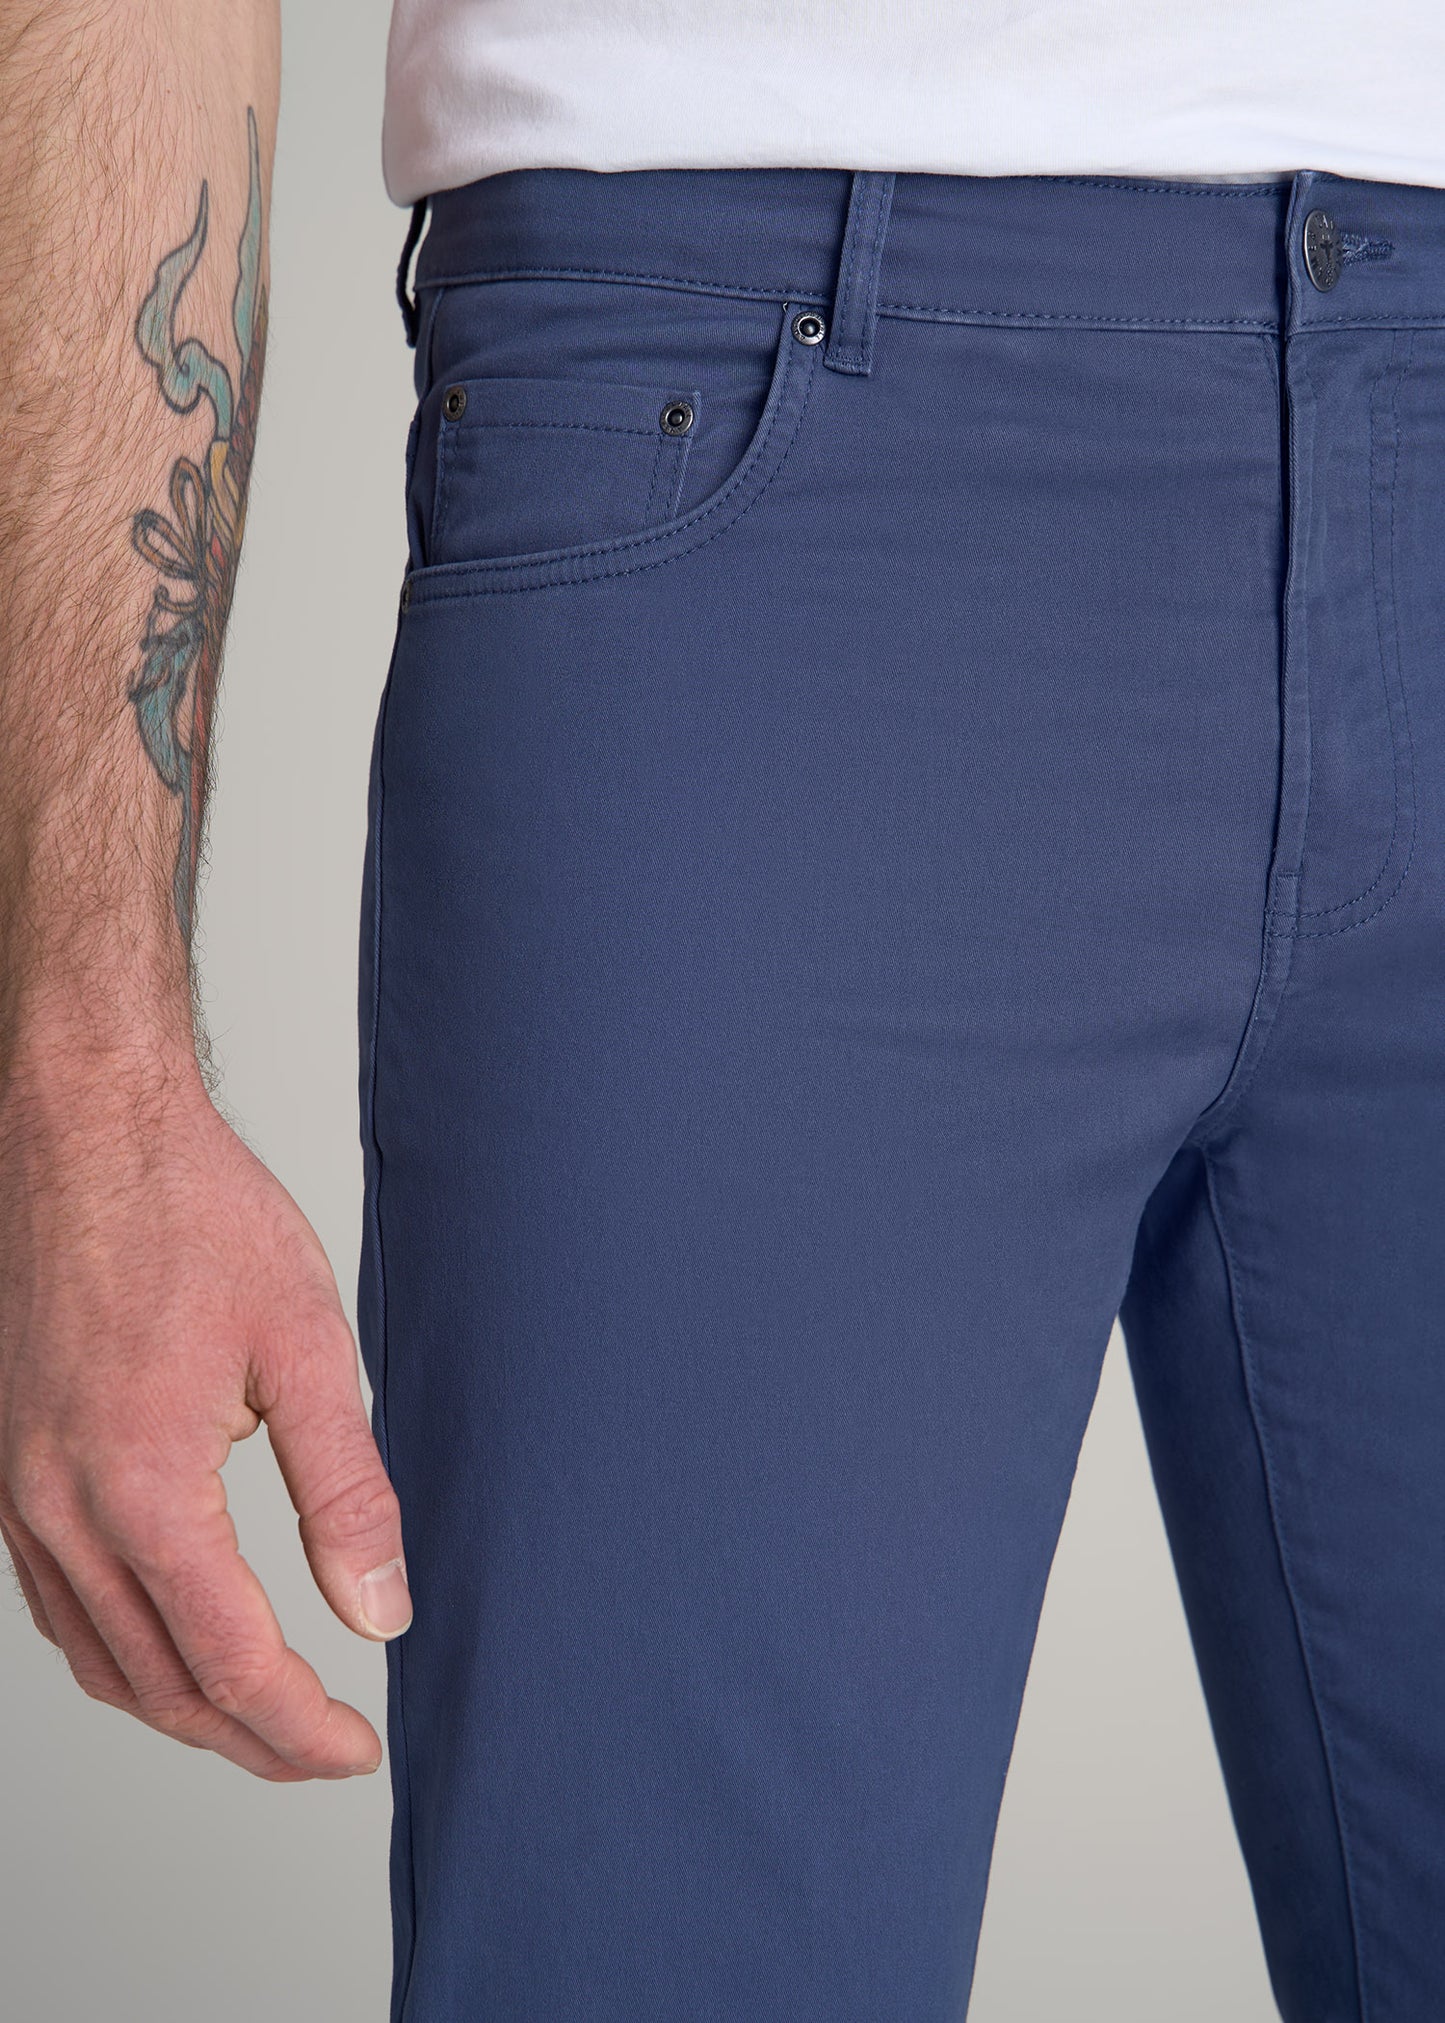 Dylan SLIM FIT Five-Pocket Pants in Steel Blue - Pants for Tall Men